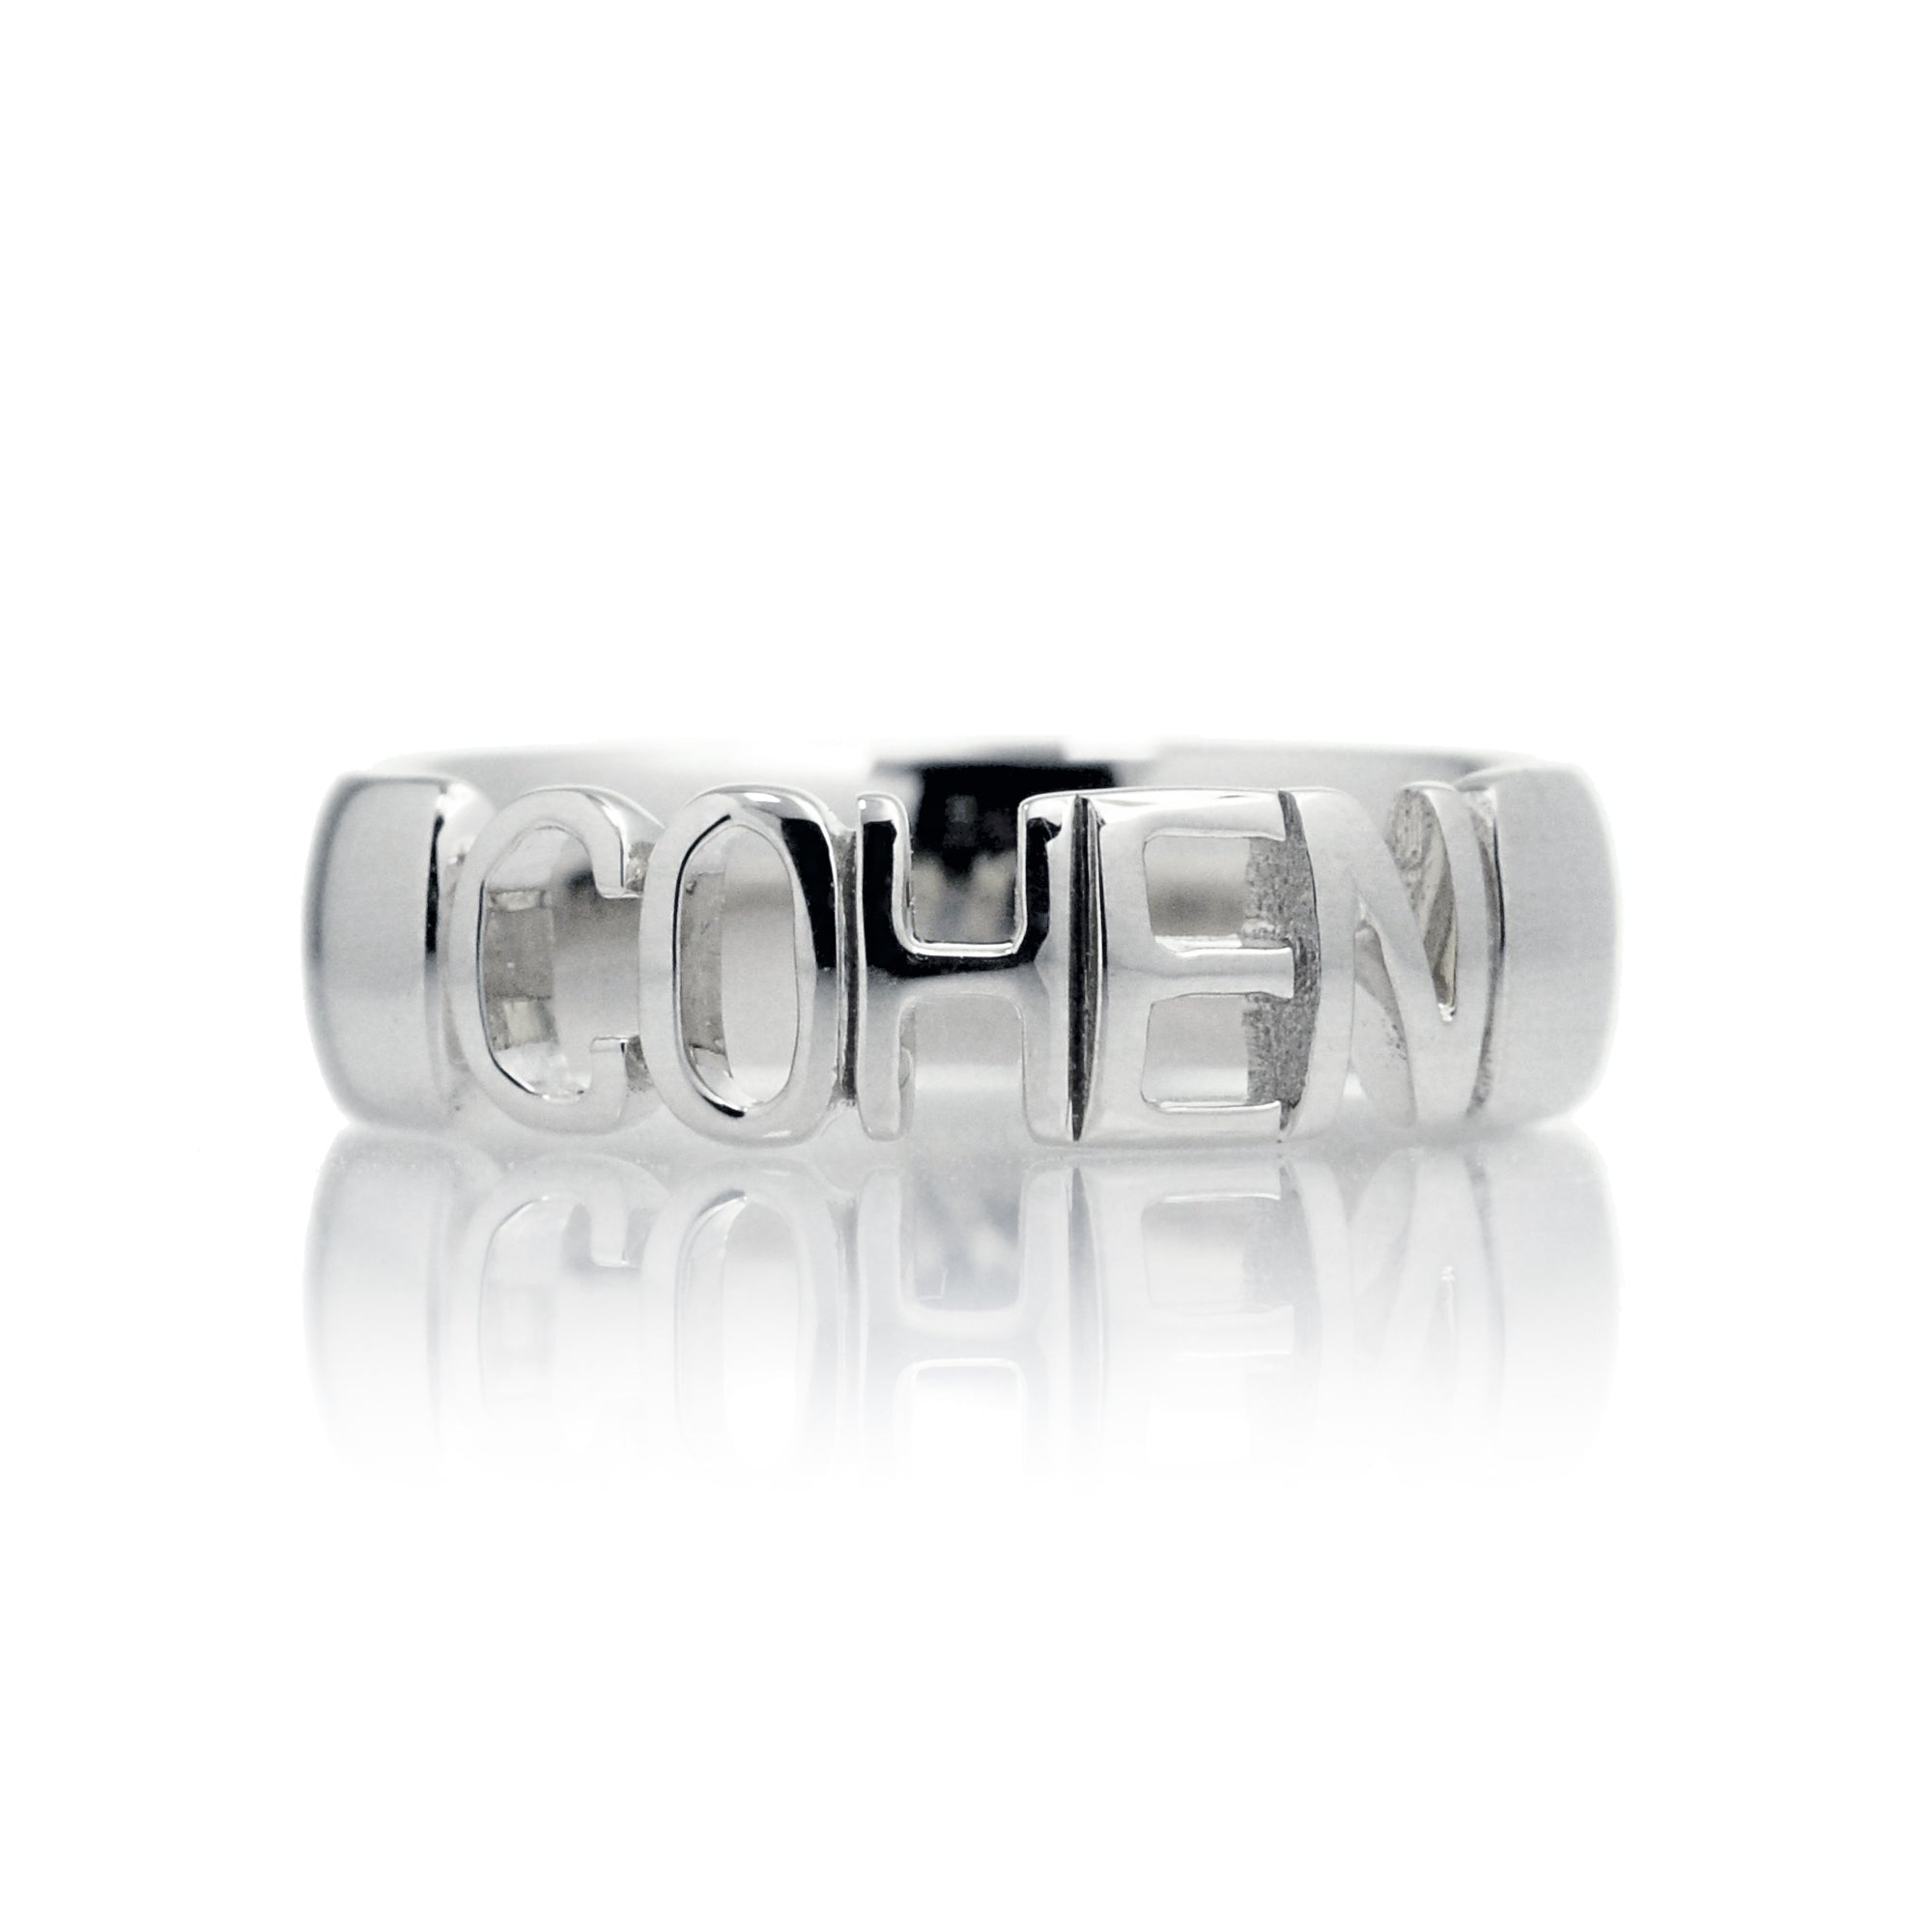 Namesake ring customize name on a band Cohen white gold